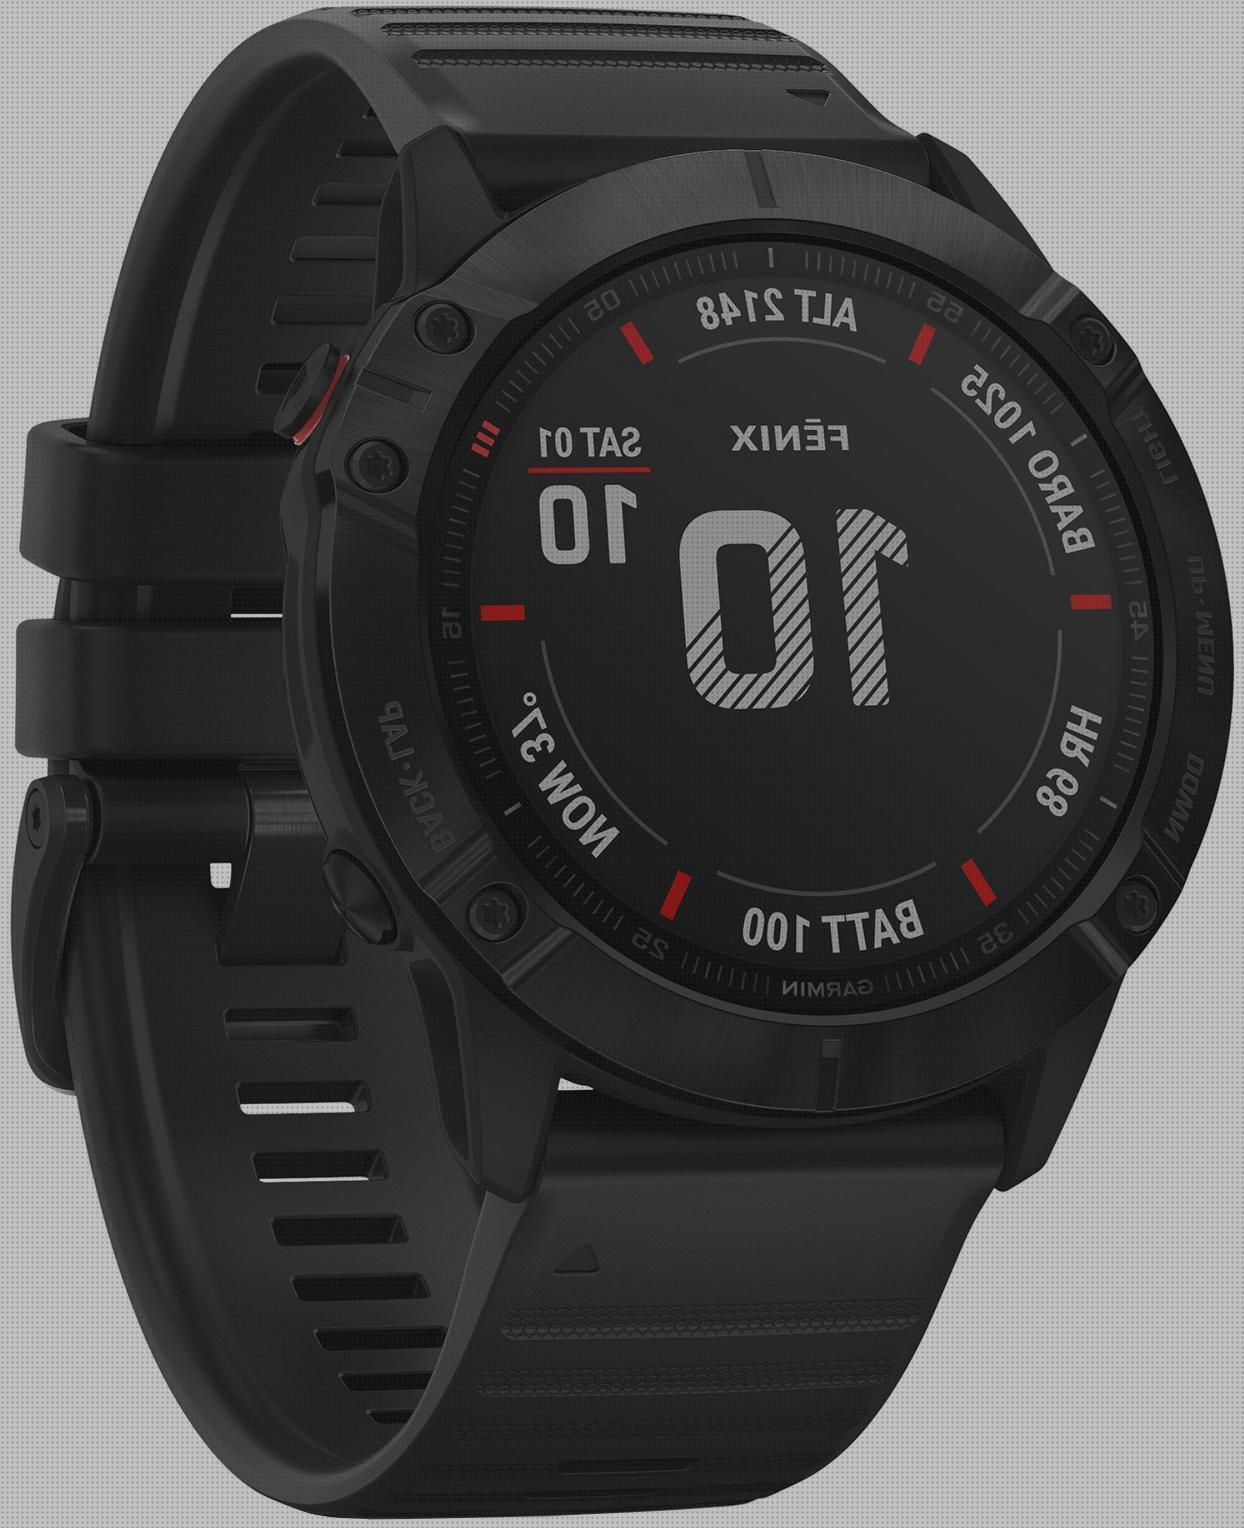 ¿Dónde poder comprar garmin gps relojes relojes con gps garmin fenix 6 x pro multisport?